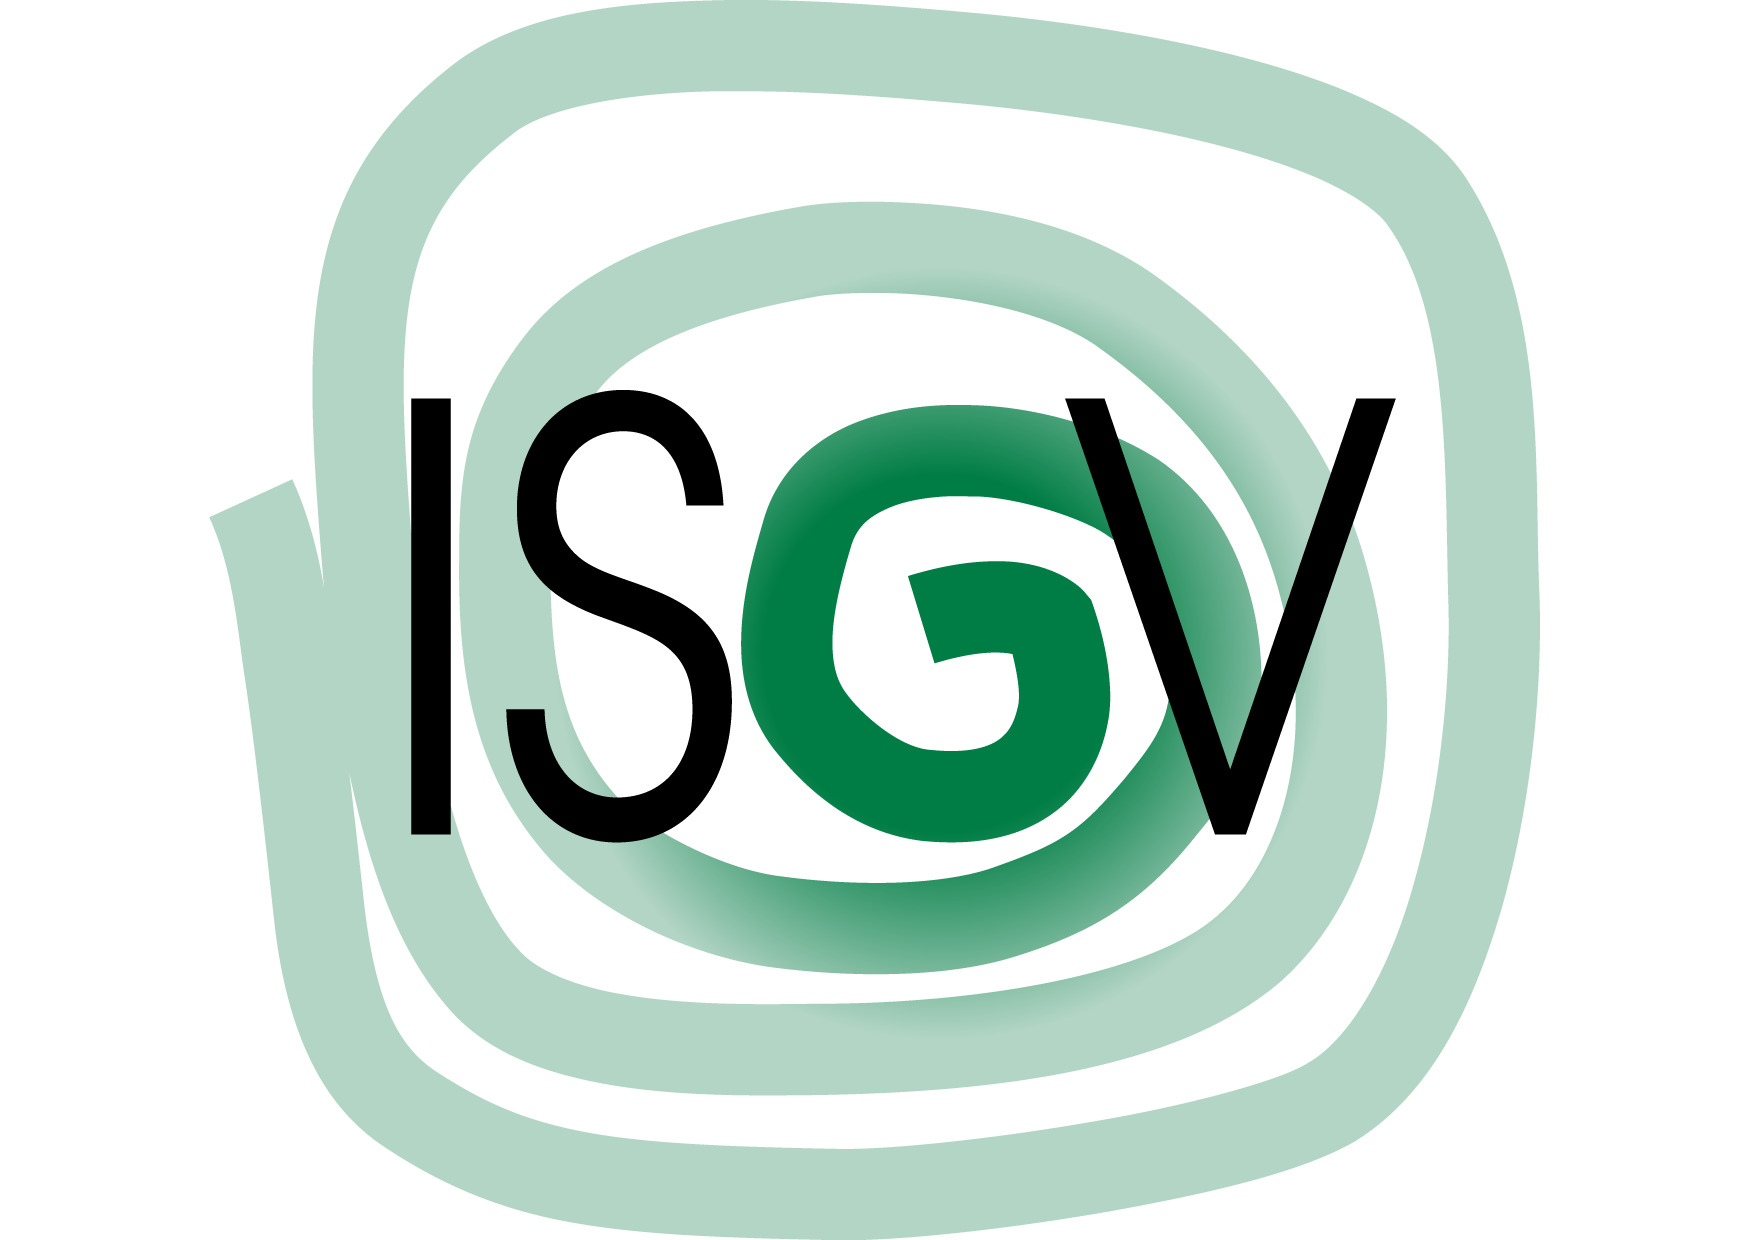 ISGV_Logo_300dpi.png